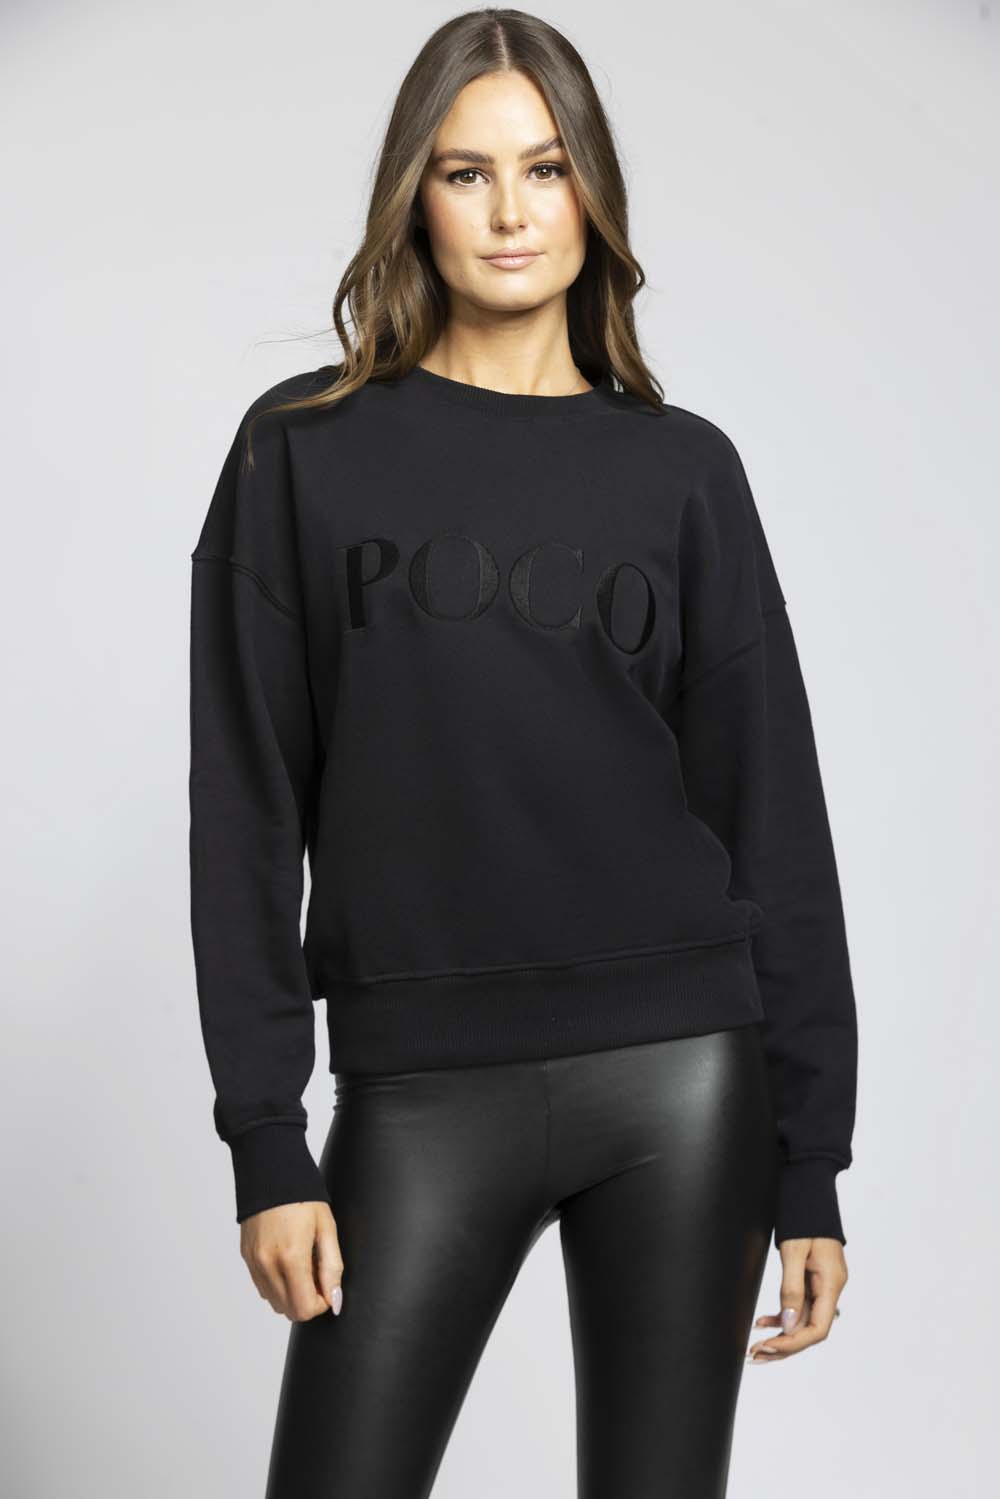 Poco Embroidery Sweatshirt Black